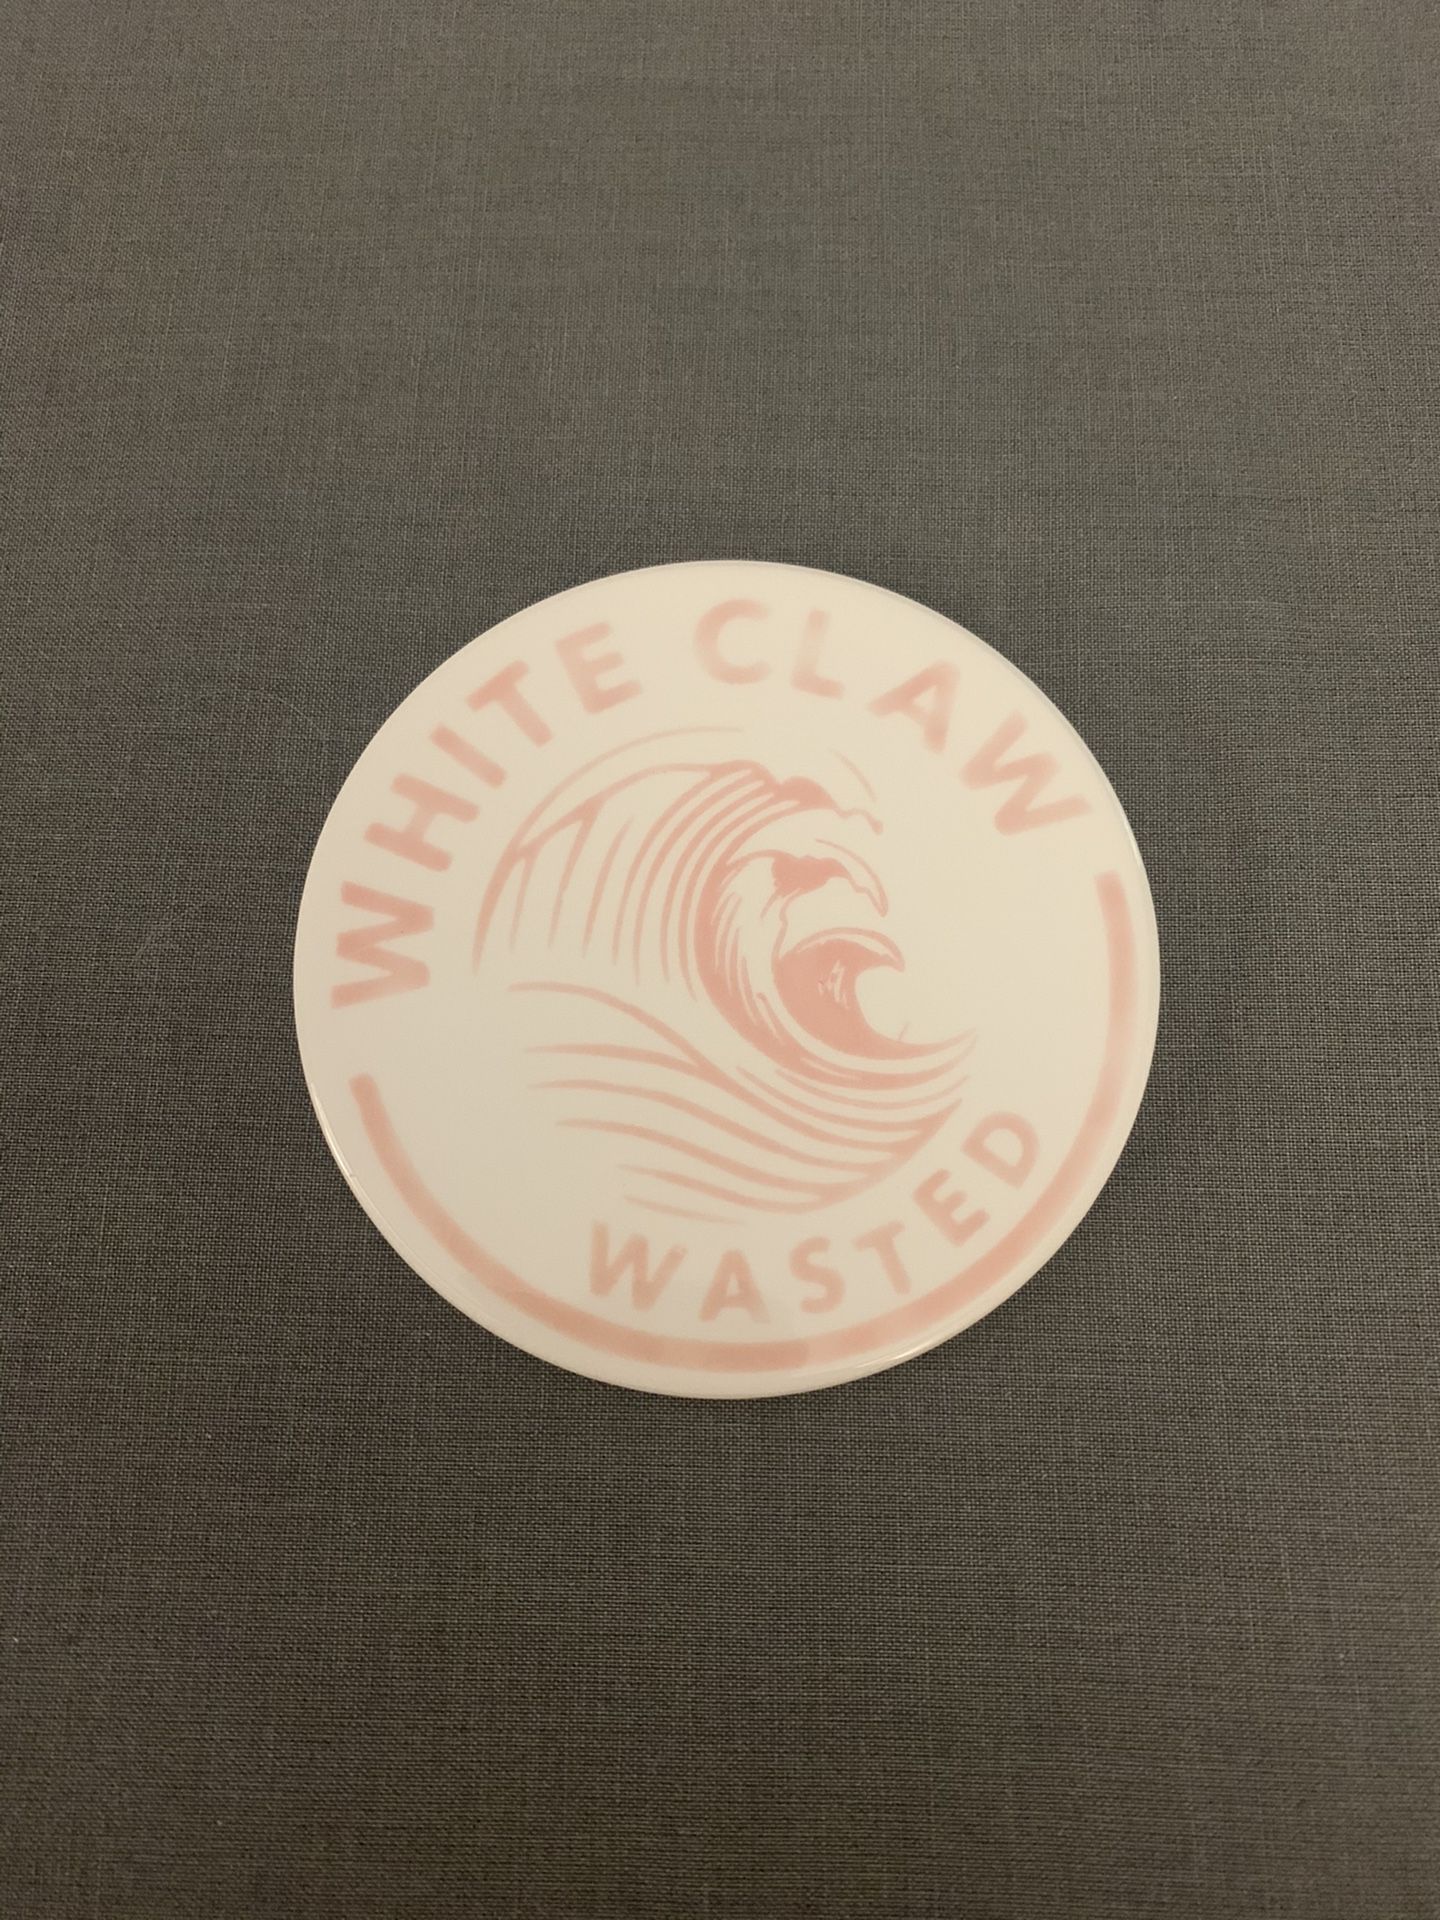 Custom white claw coasters